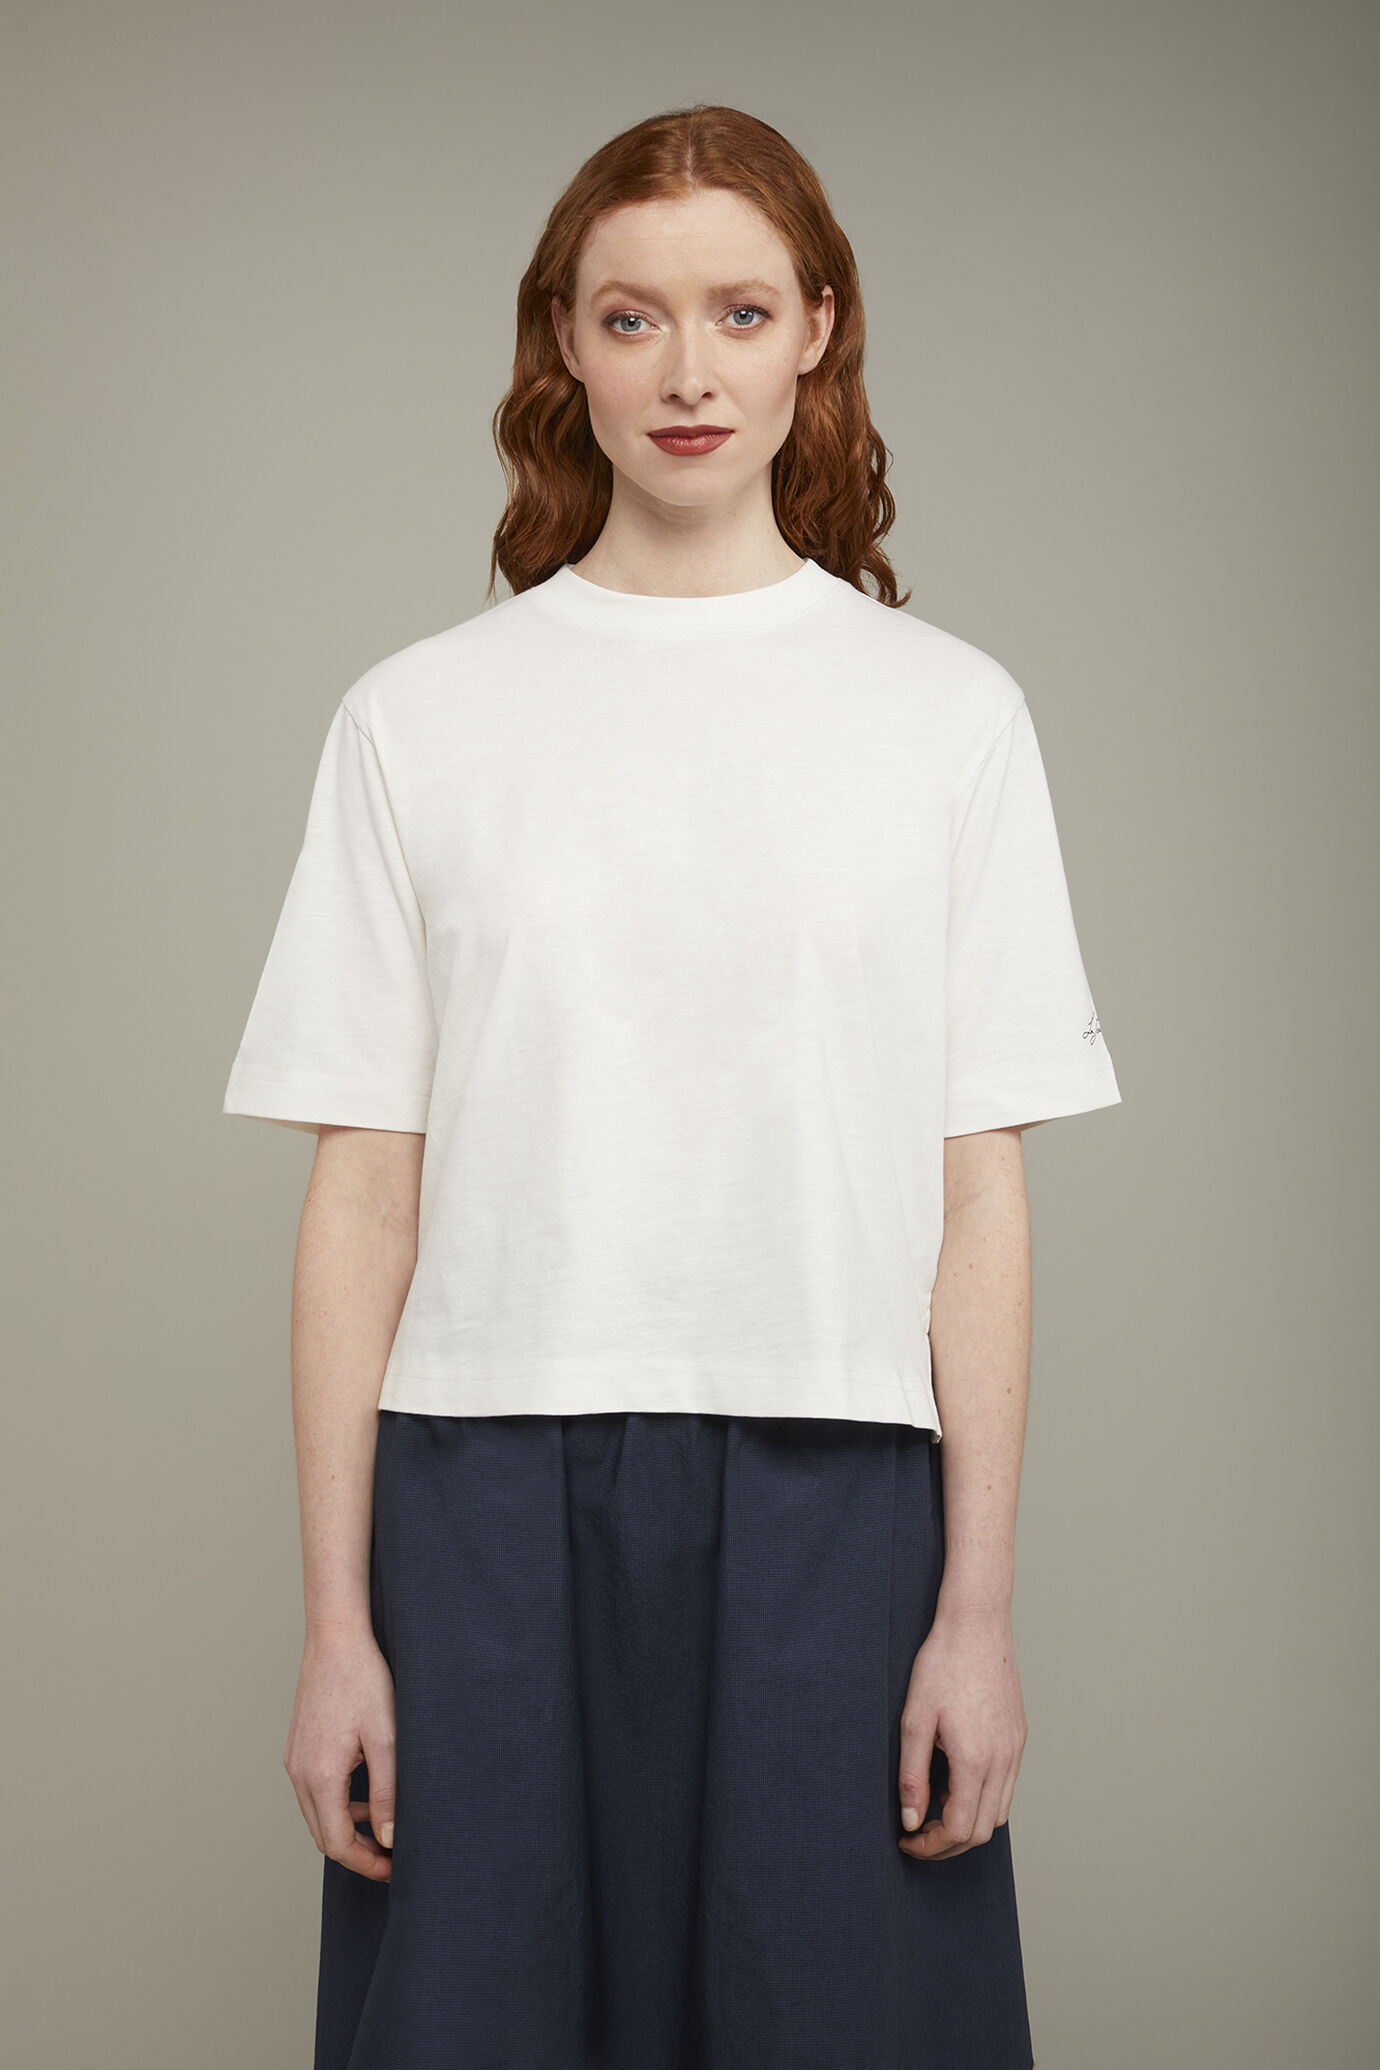 Women’s round neck t-shirt 100% cotton regular fit